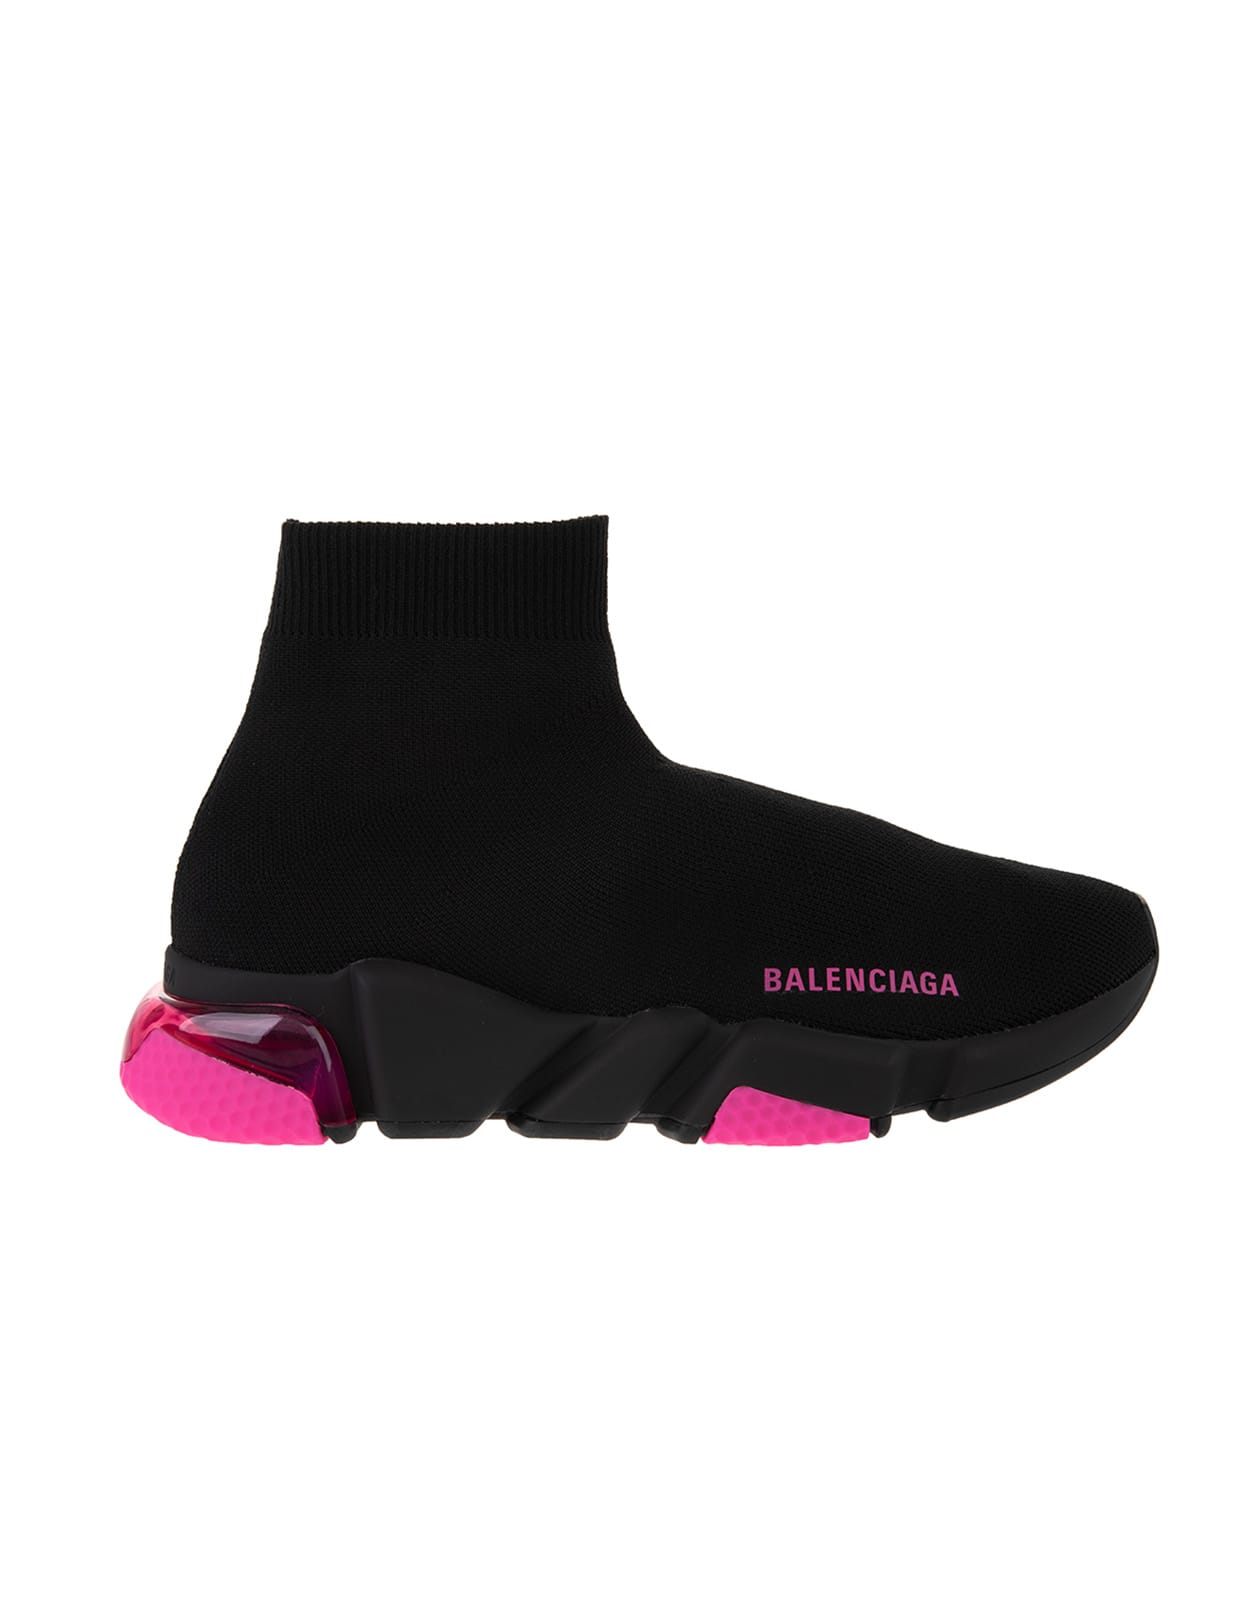 Balenciaga Woman Black And Fuchsia Speed Clear Sole Sneakers